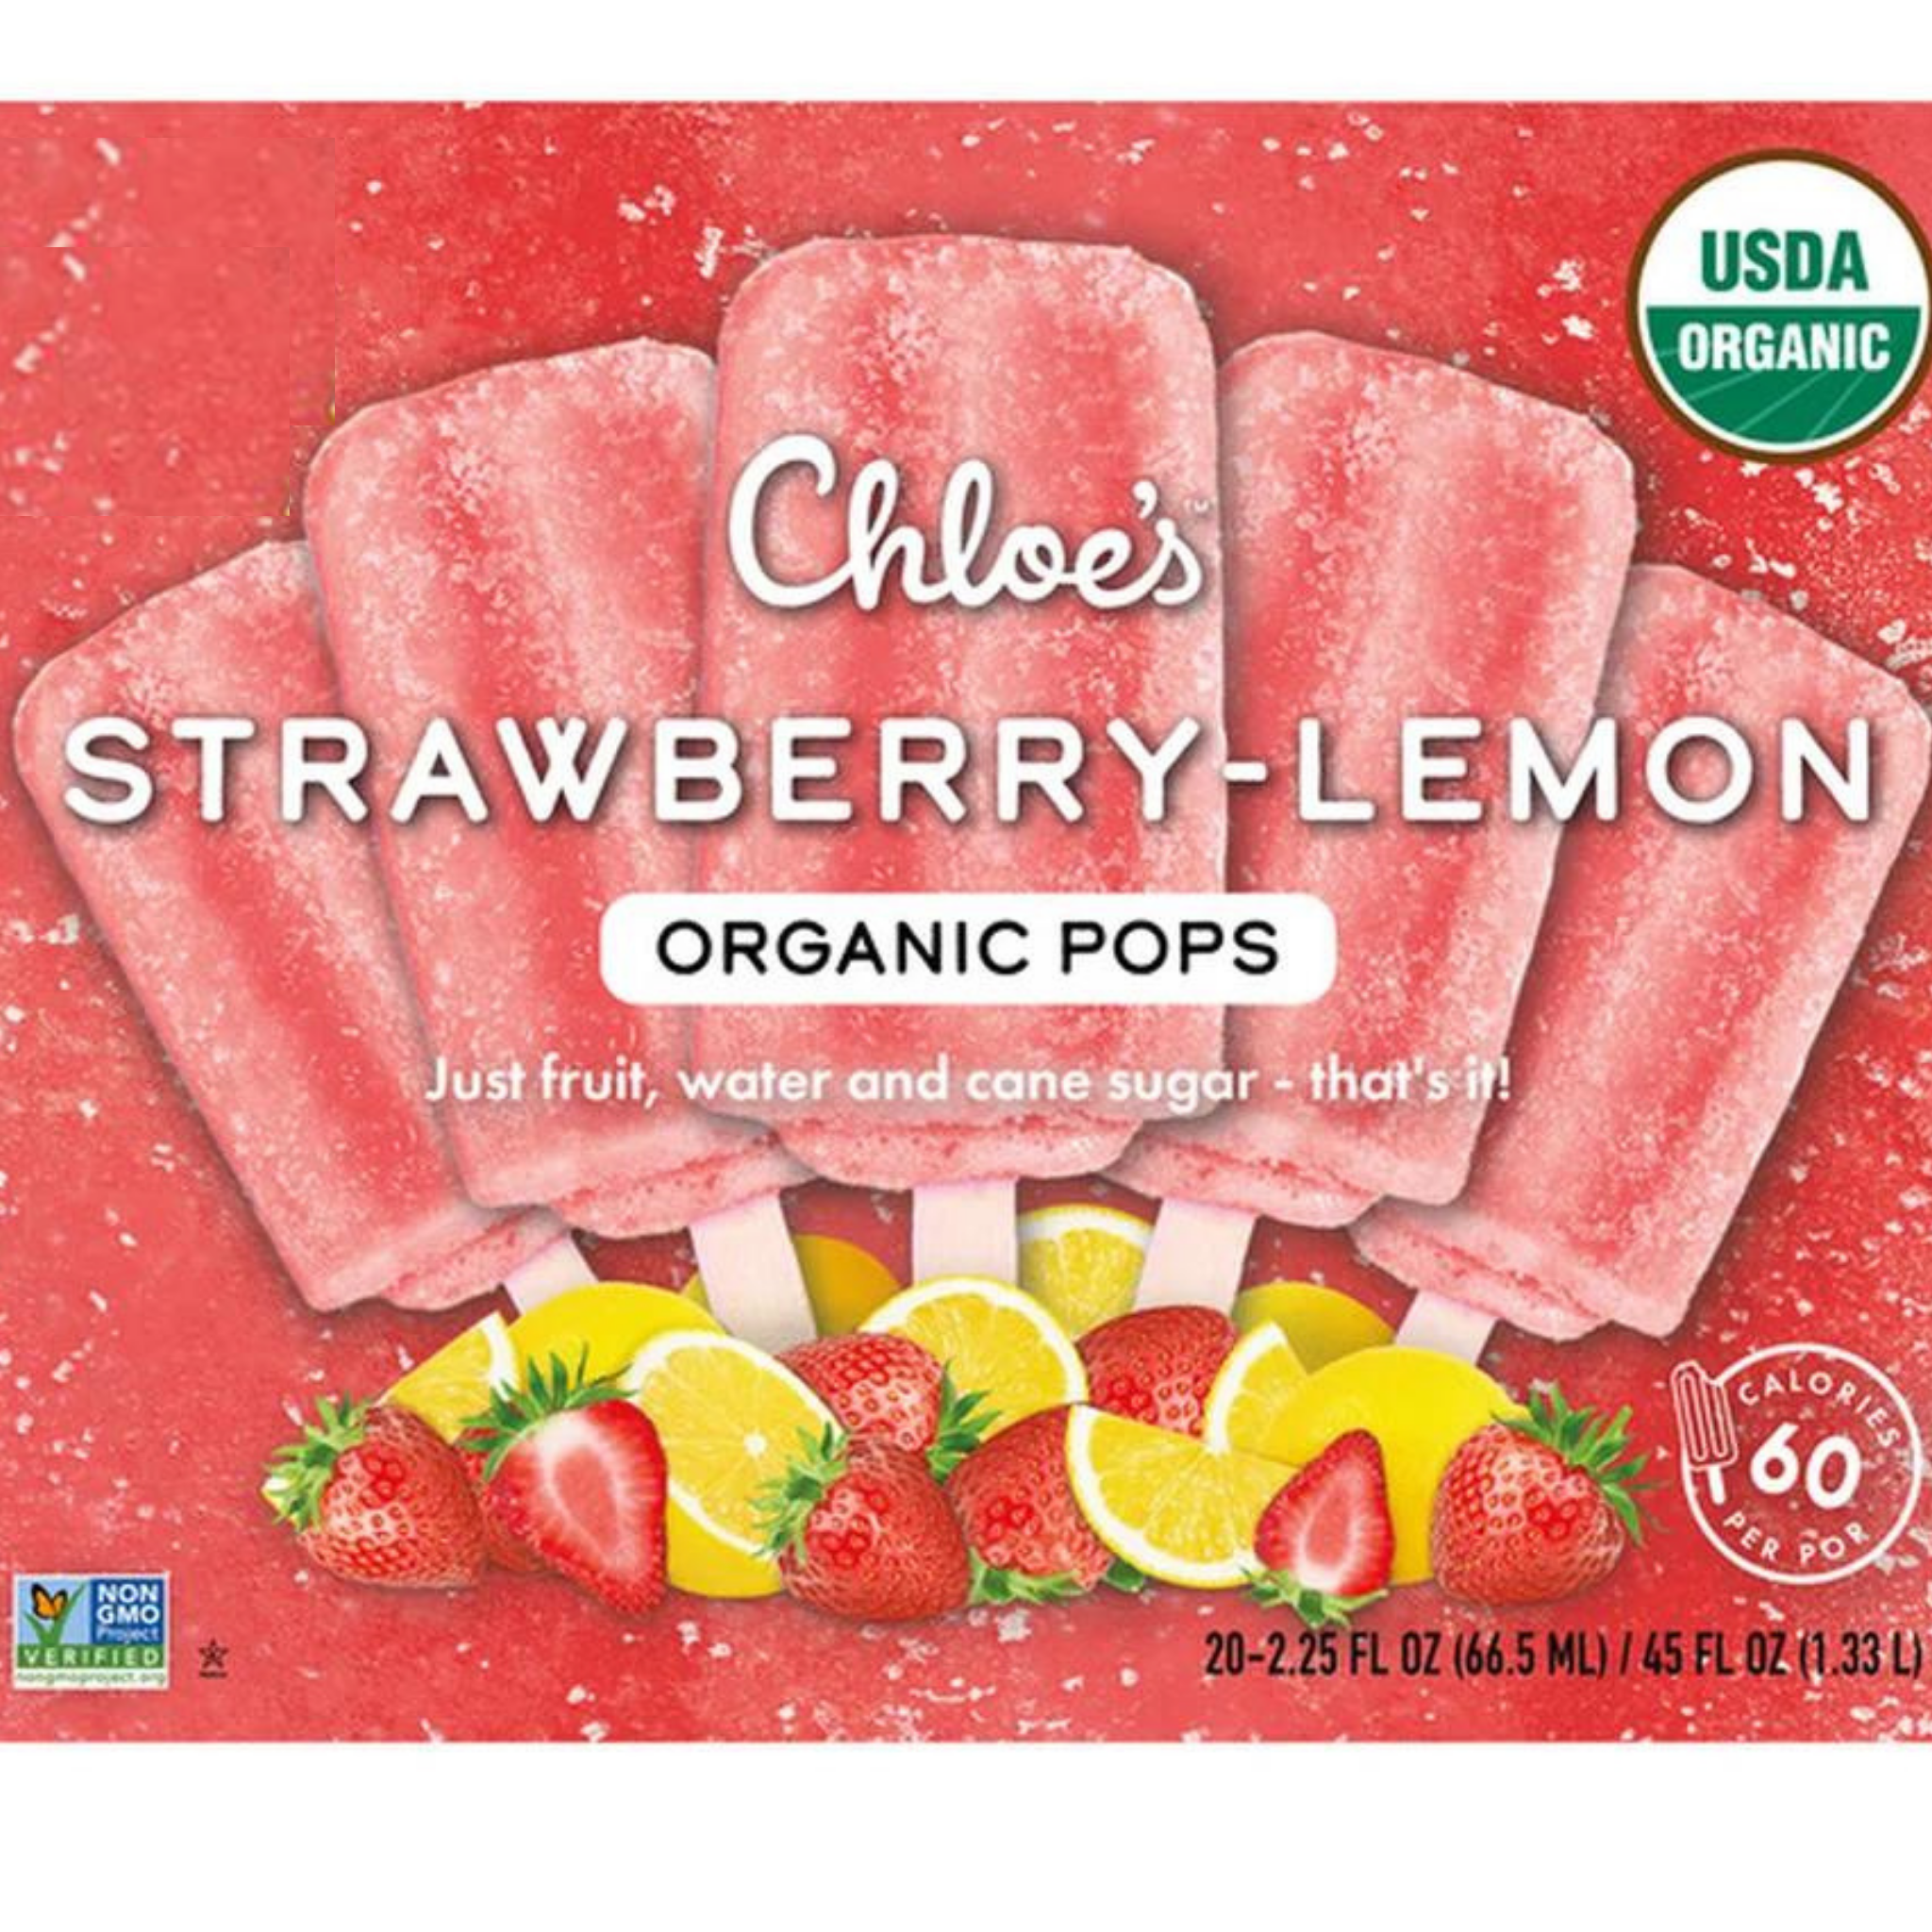 Chloes Strawberry Lemon Pops